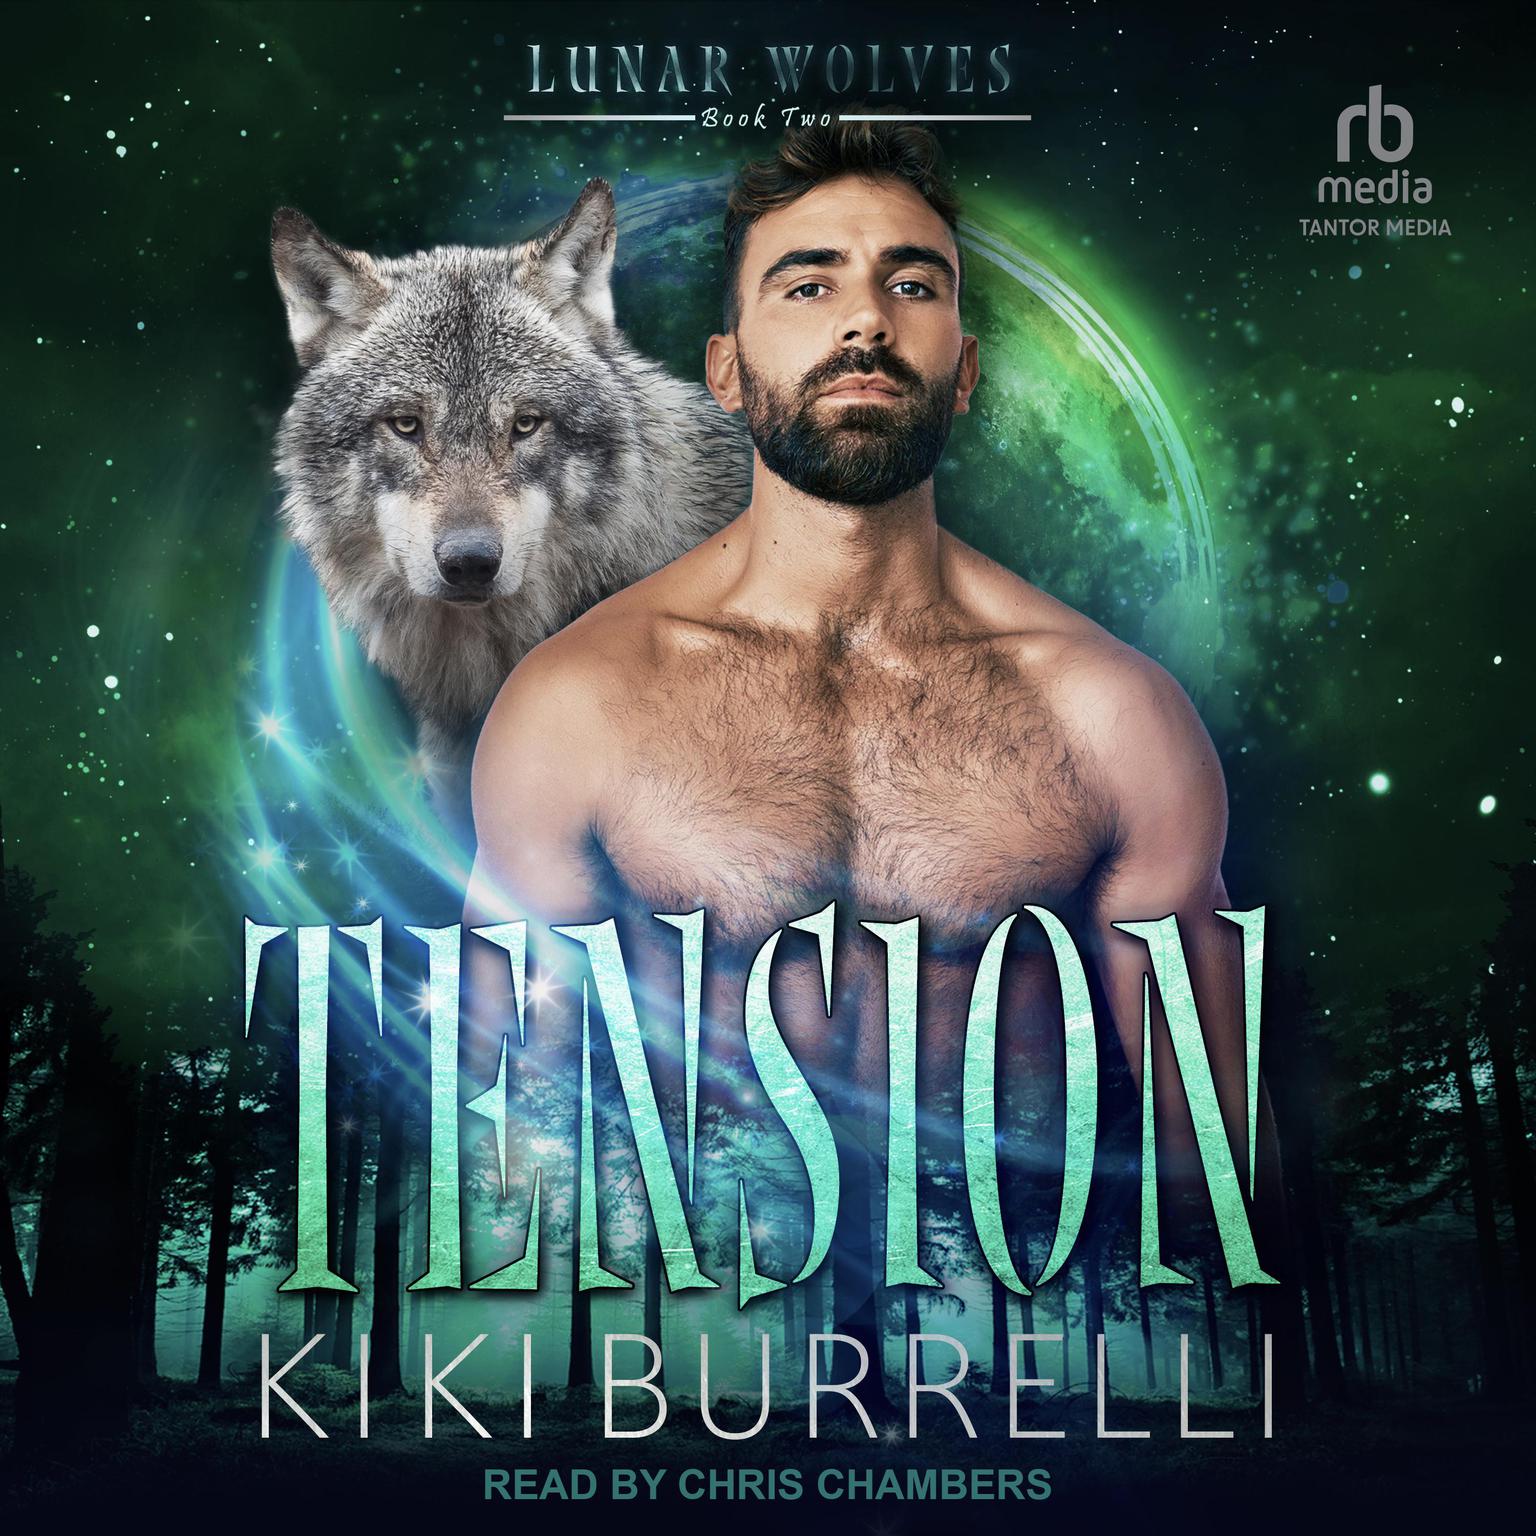 Tension Audiobook, by Kiki Burrelli